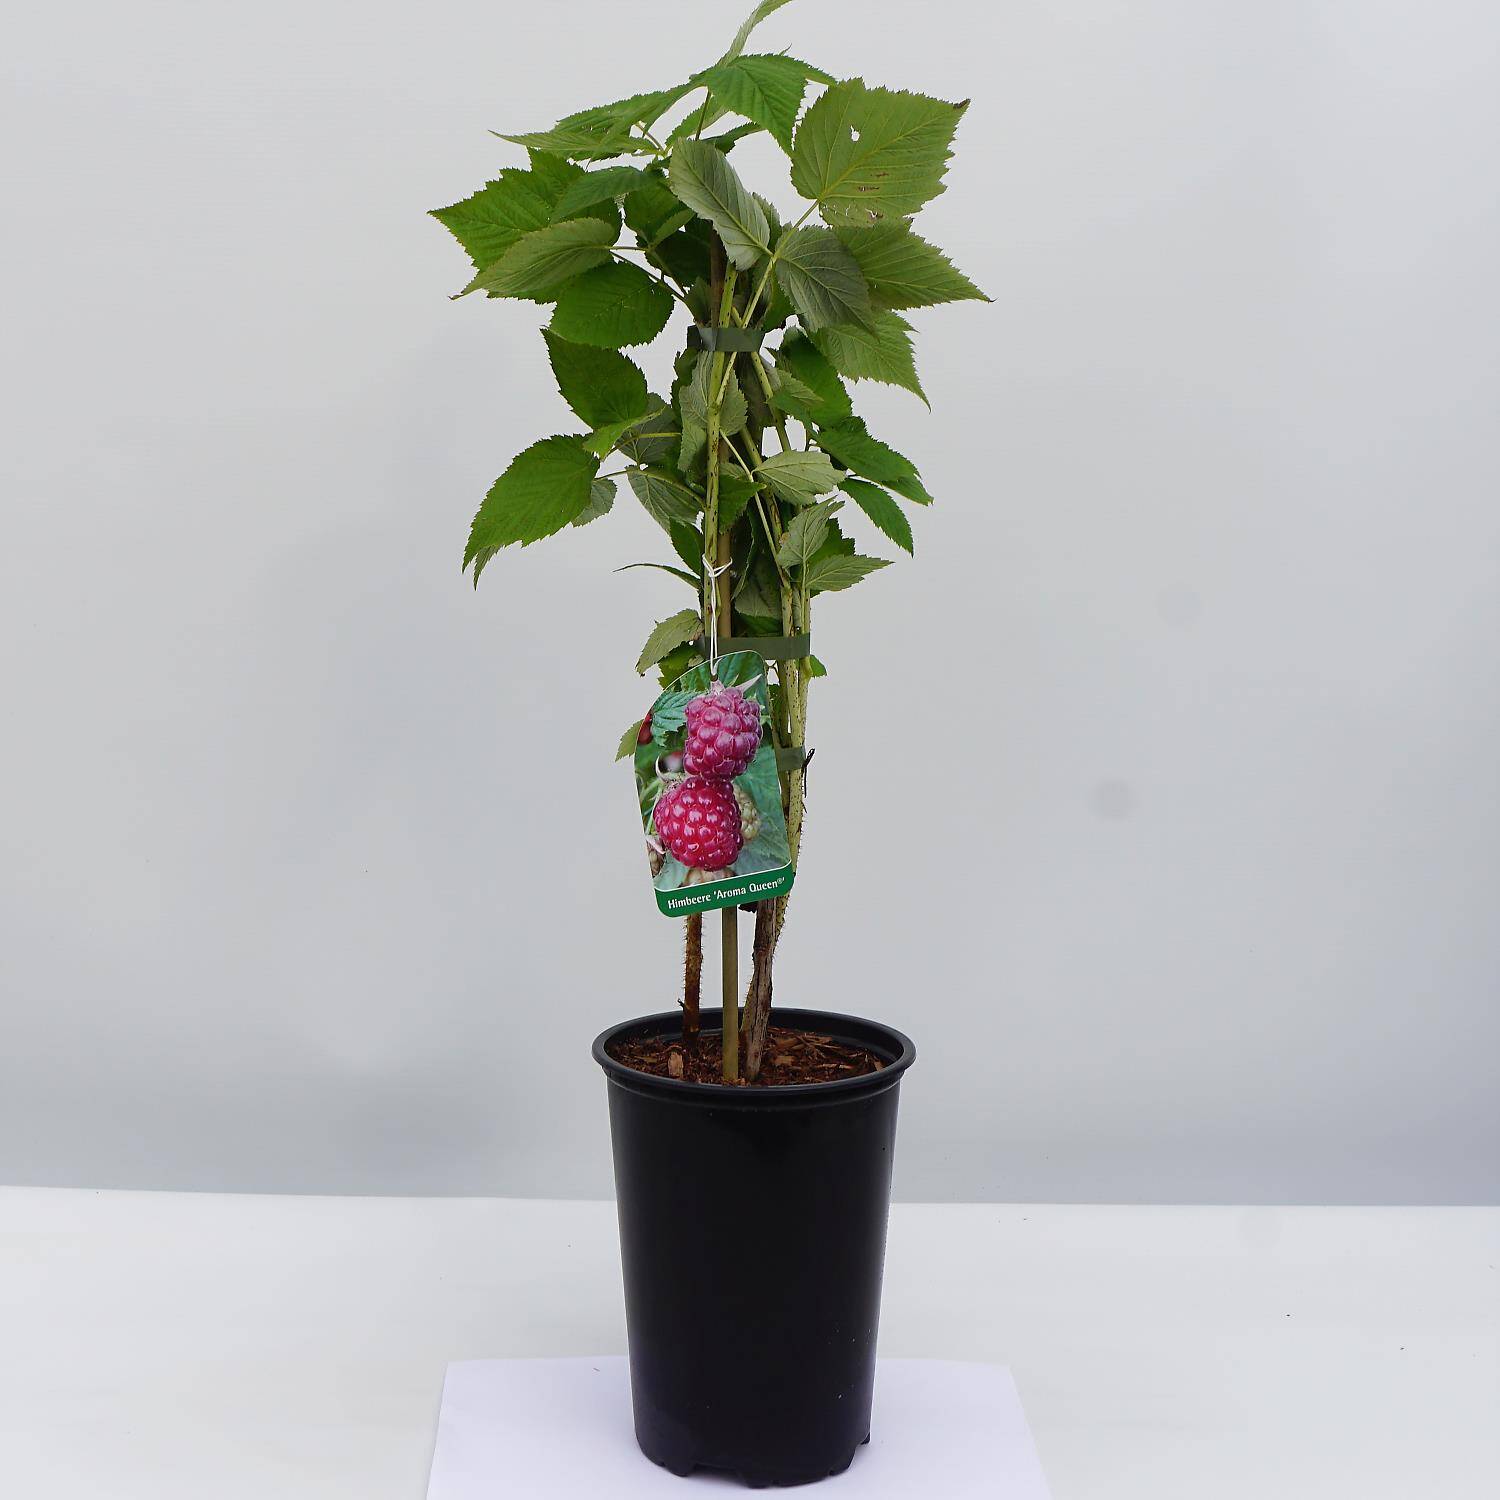 Kategorie <b>Obst </b> - Himbeere 'Aroma Queen' ® - Rubus idaeus 'Aroma Queen' ®